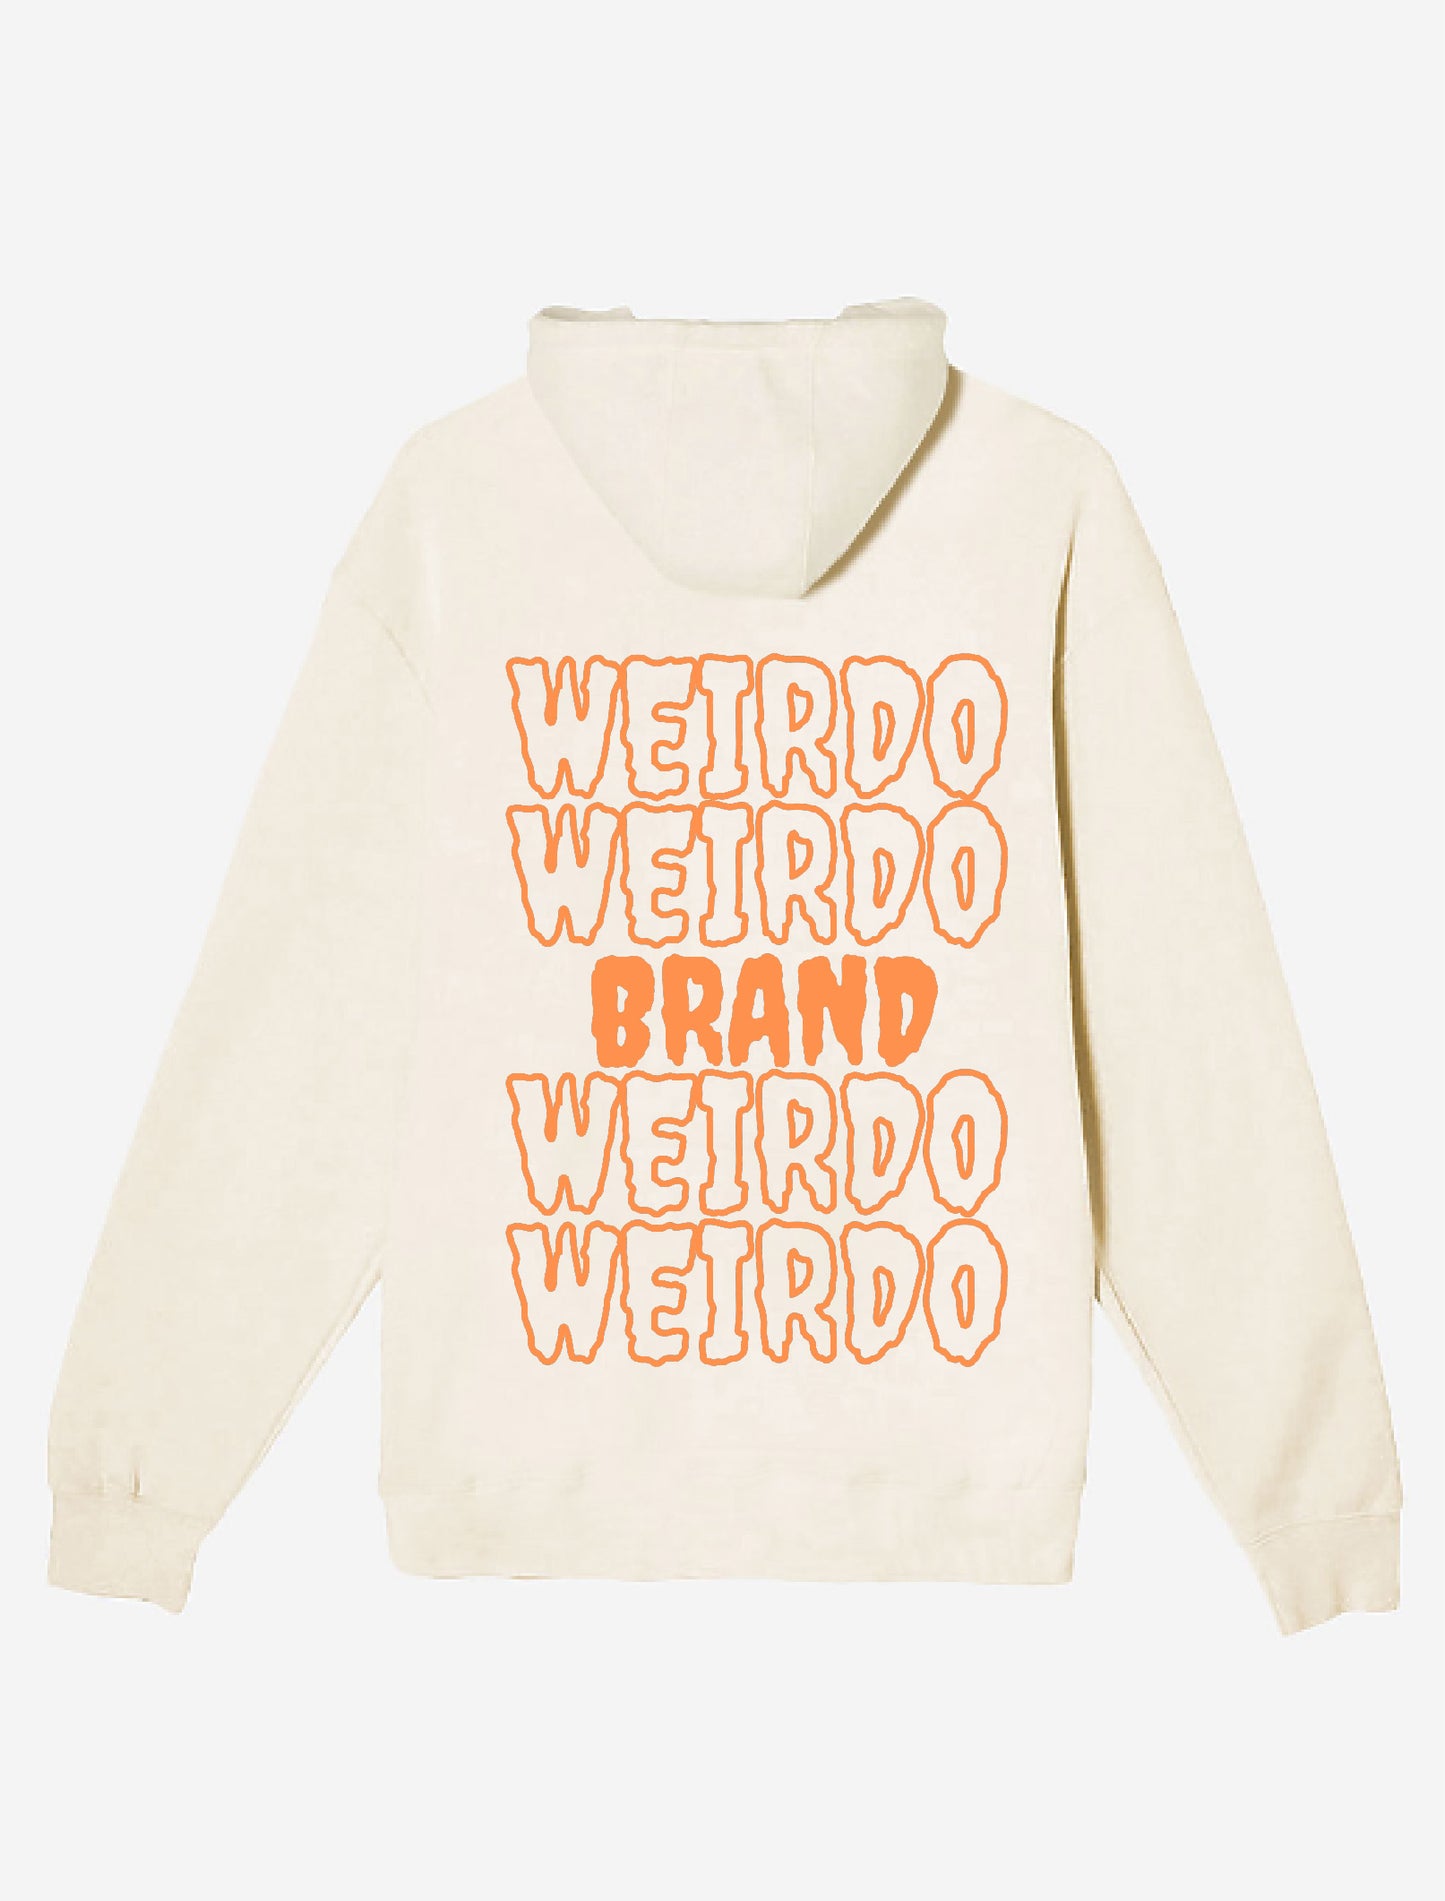 Weirdo Brand-orange back image (hoodie)